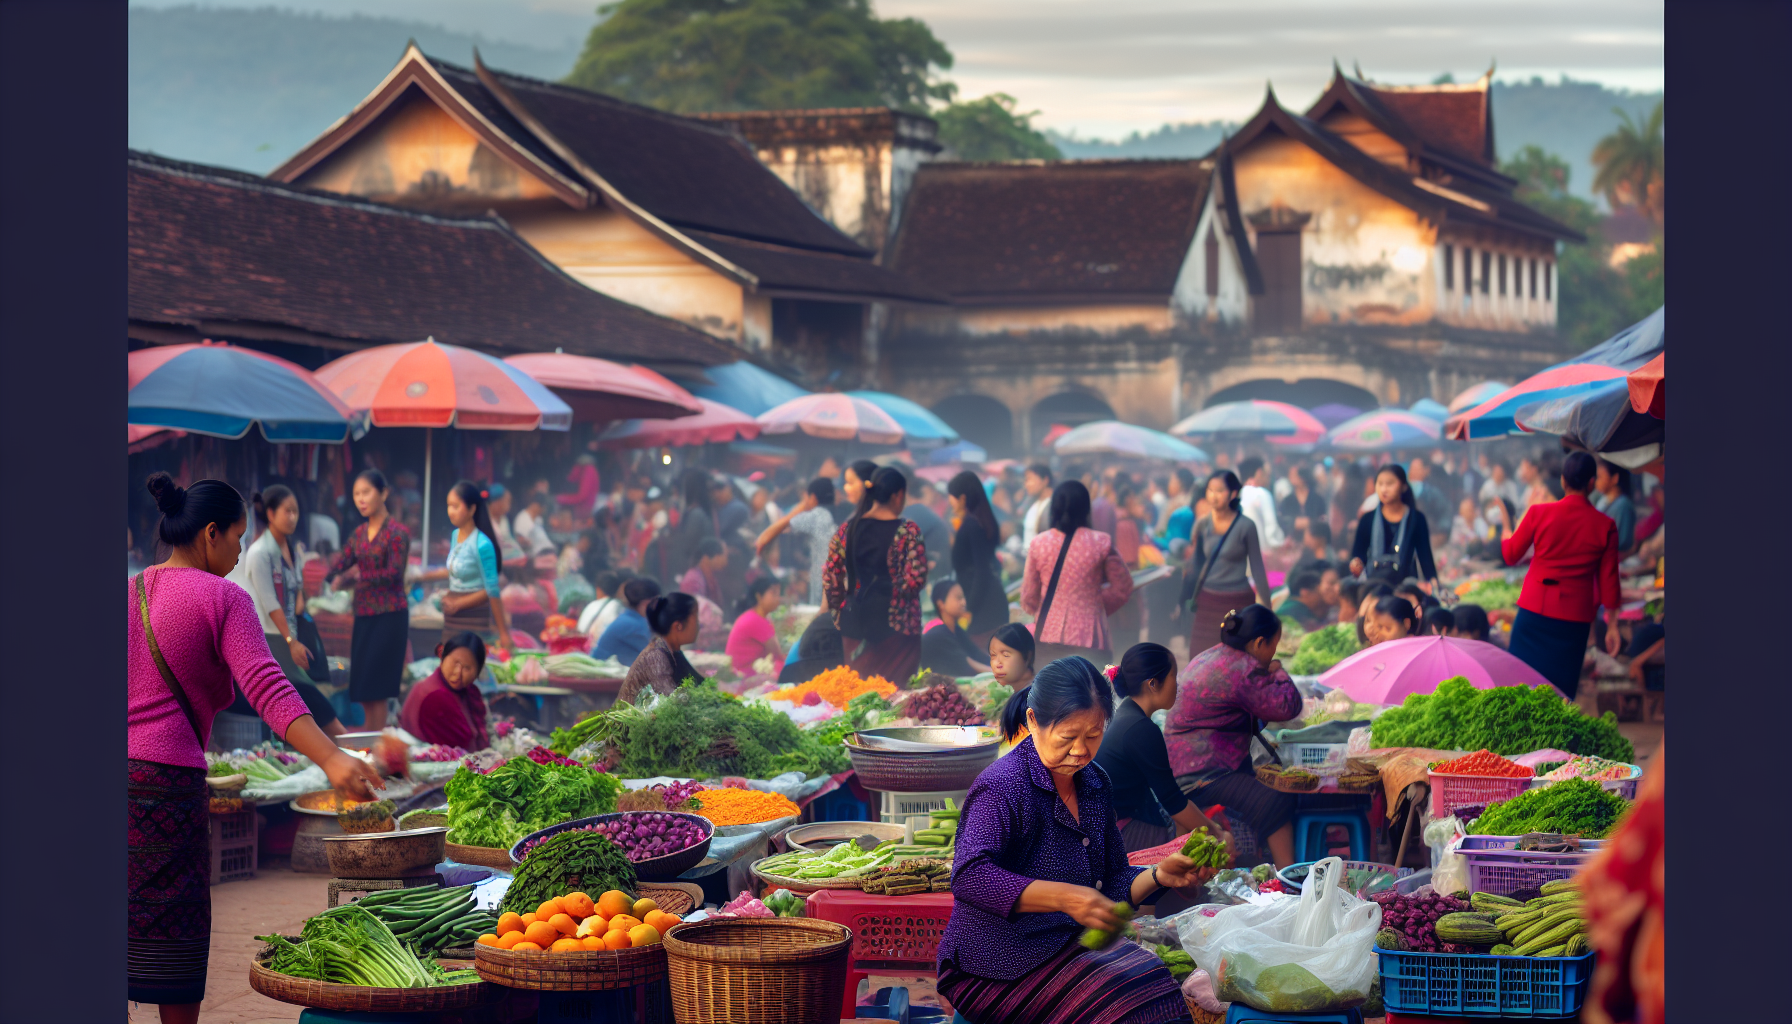 Colorful display of handicrafts at the bustling morning market in Luang Prabang